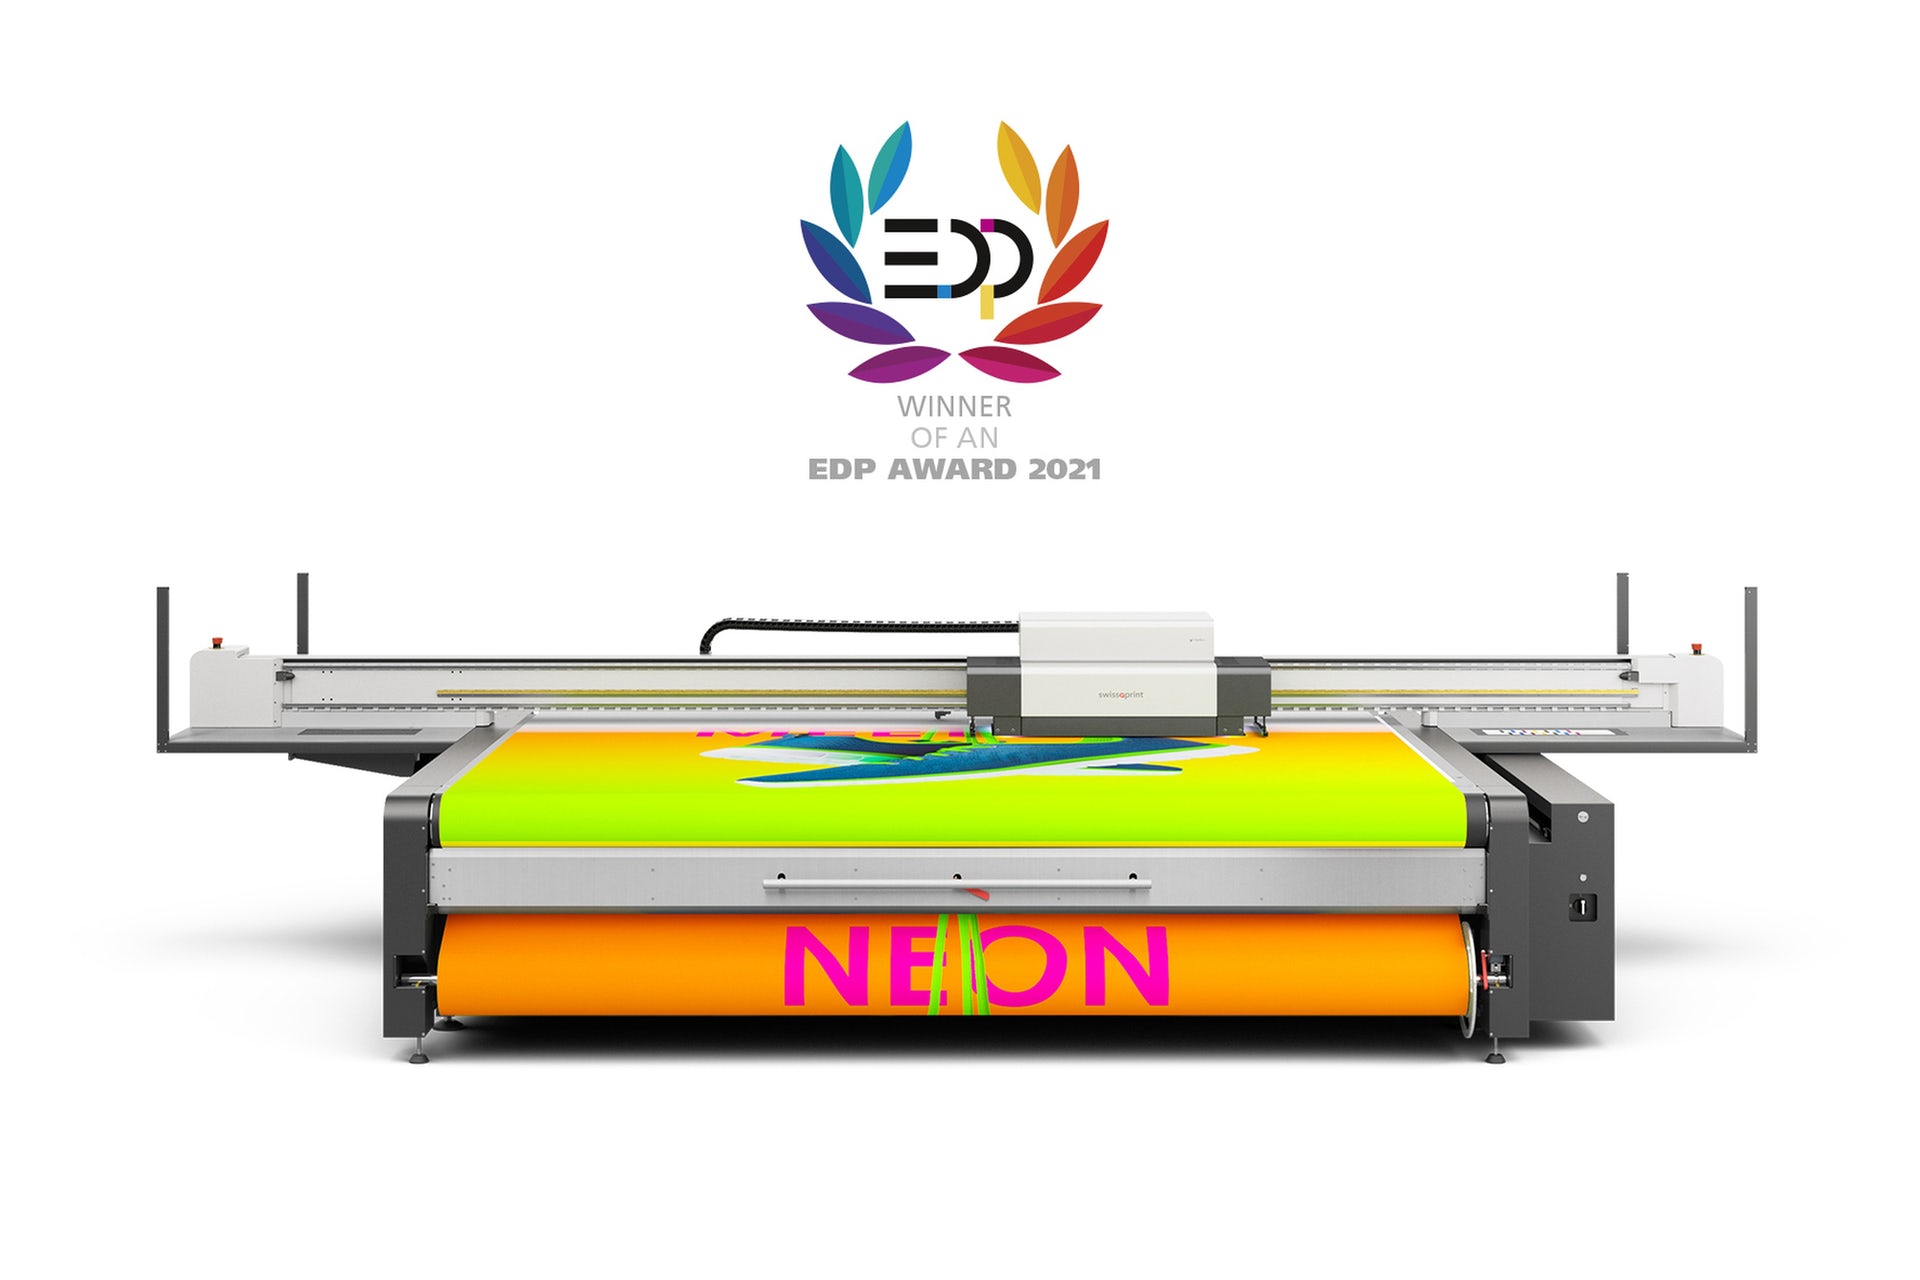 sqp_g4_neon_edp-award-2021